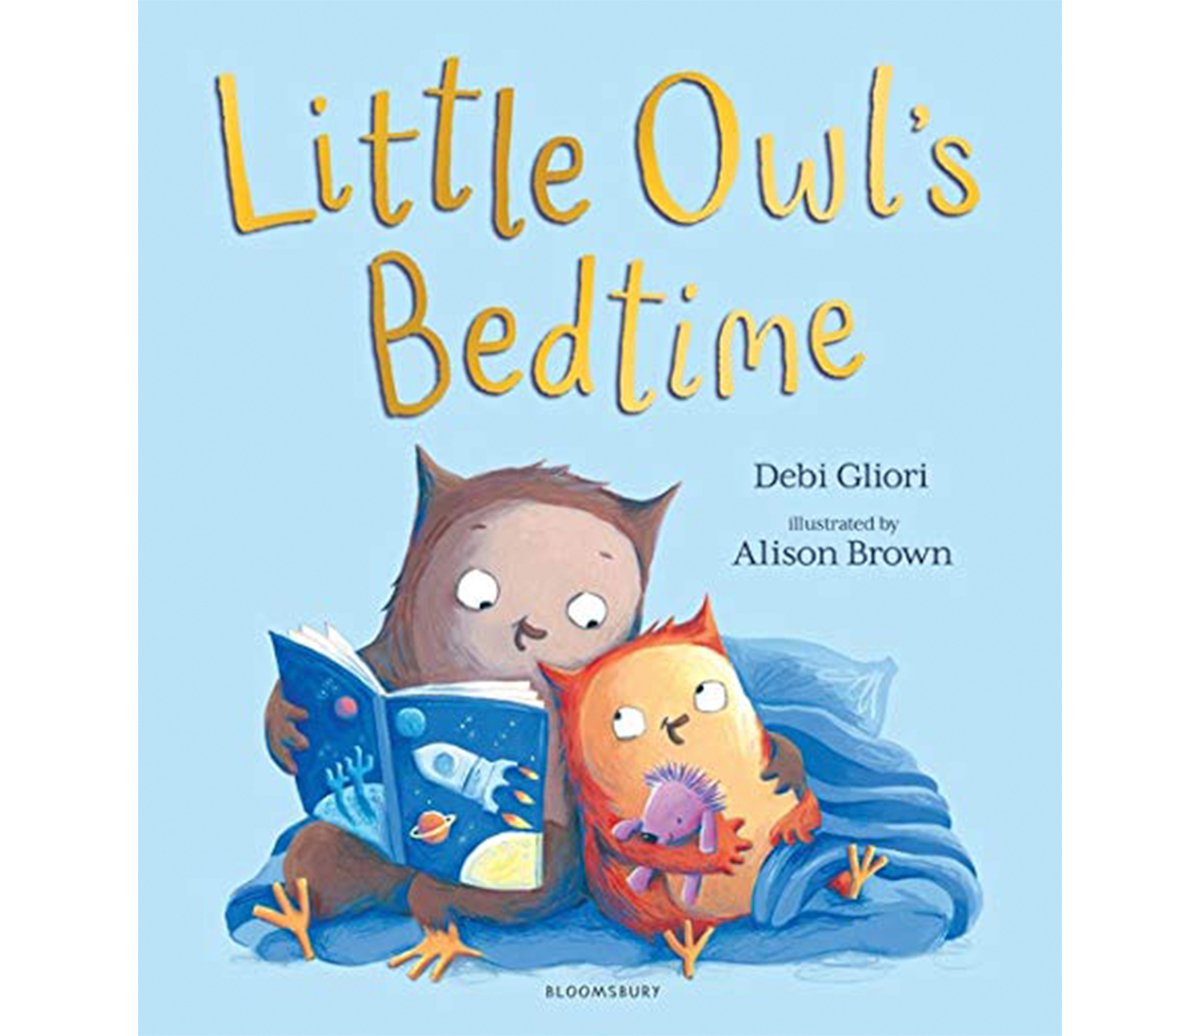 debi-gliori-little-owls-bedtime.jpg